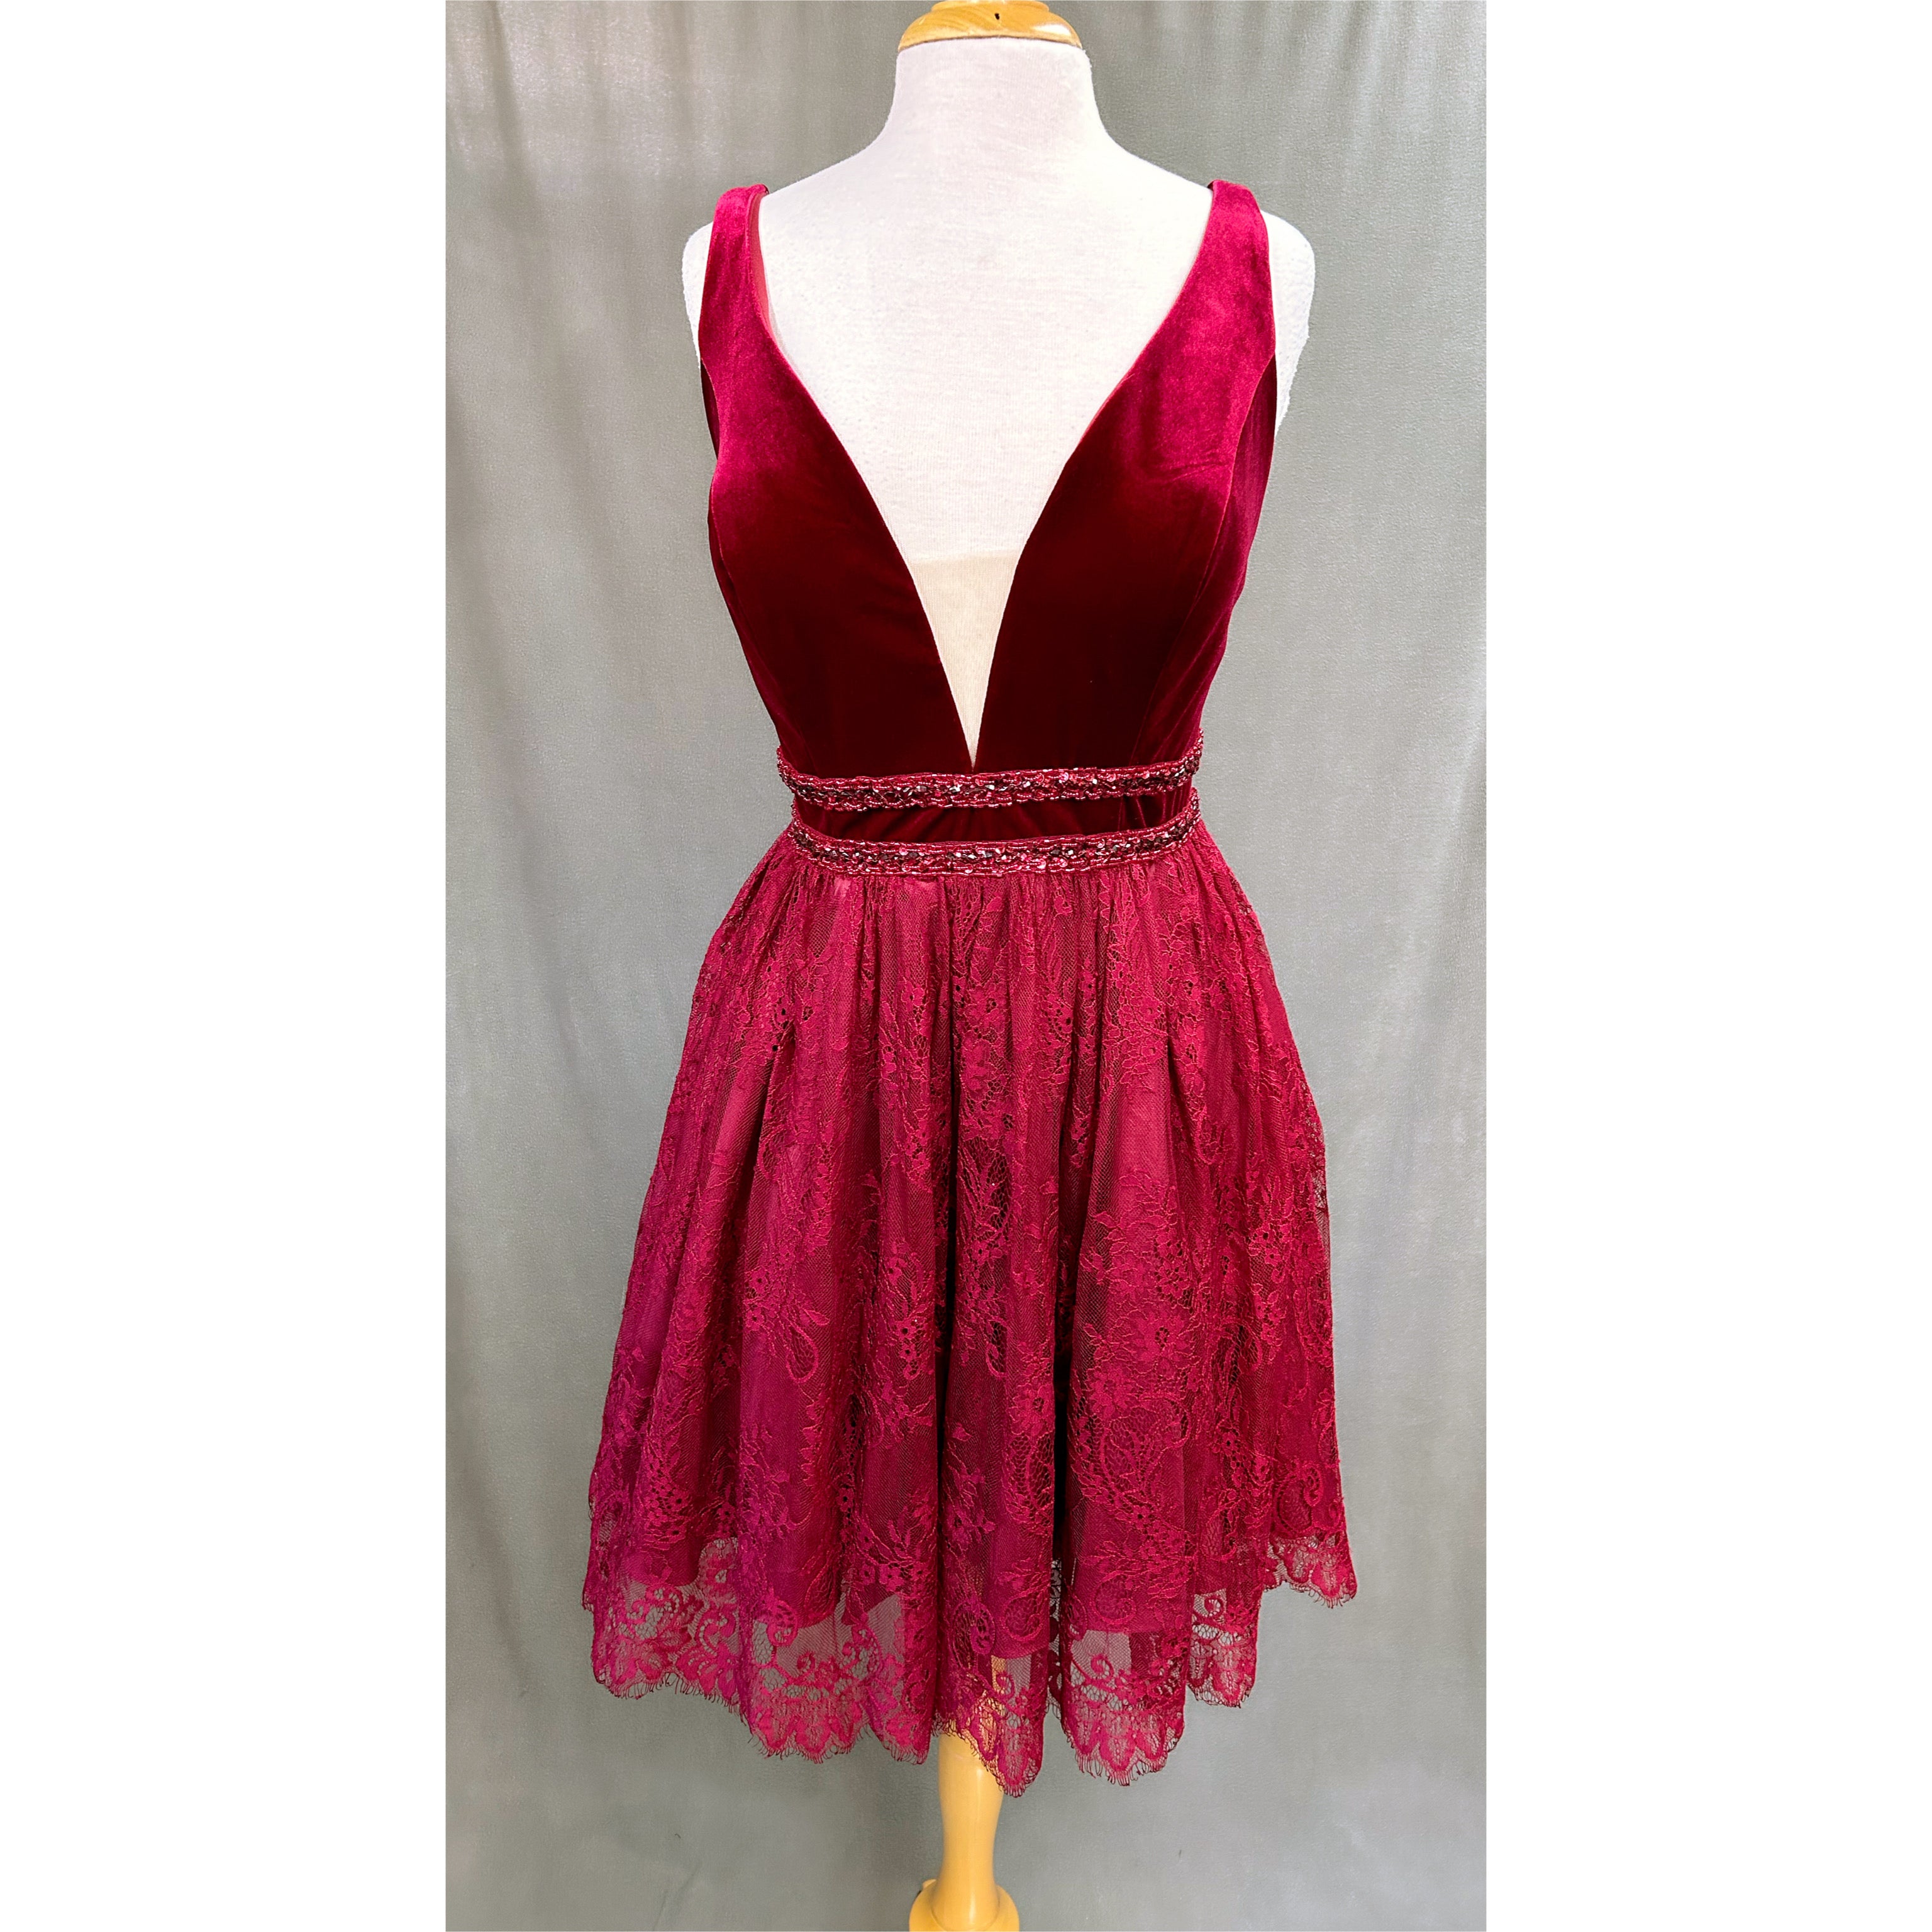 Coya burgundy dress, size XL